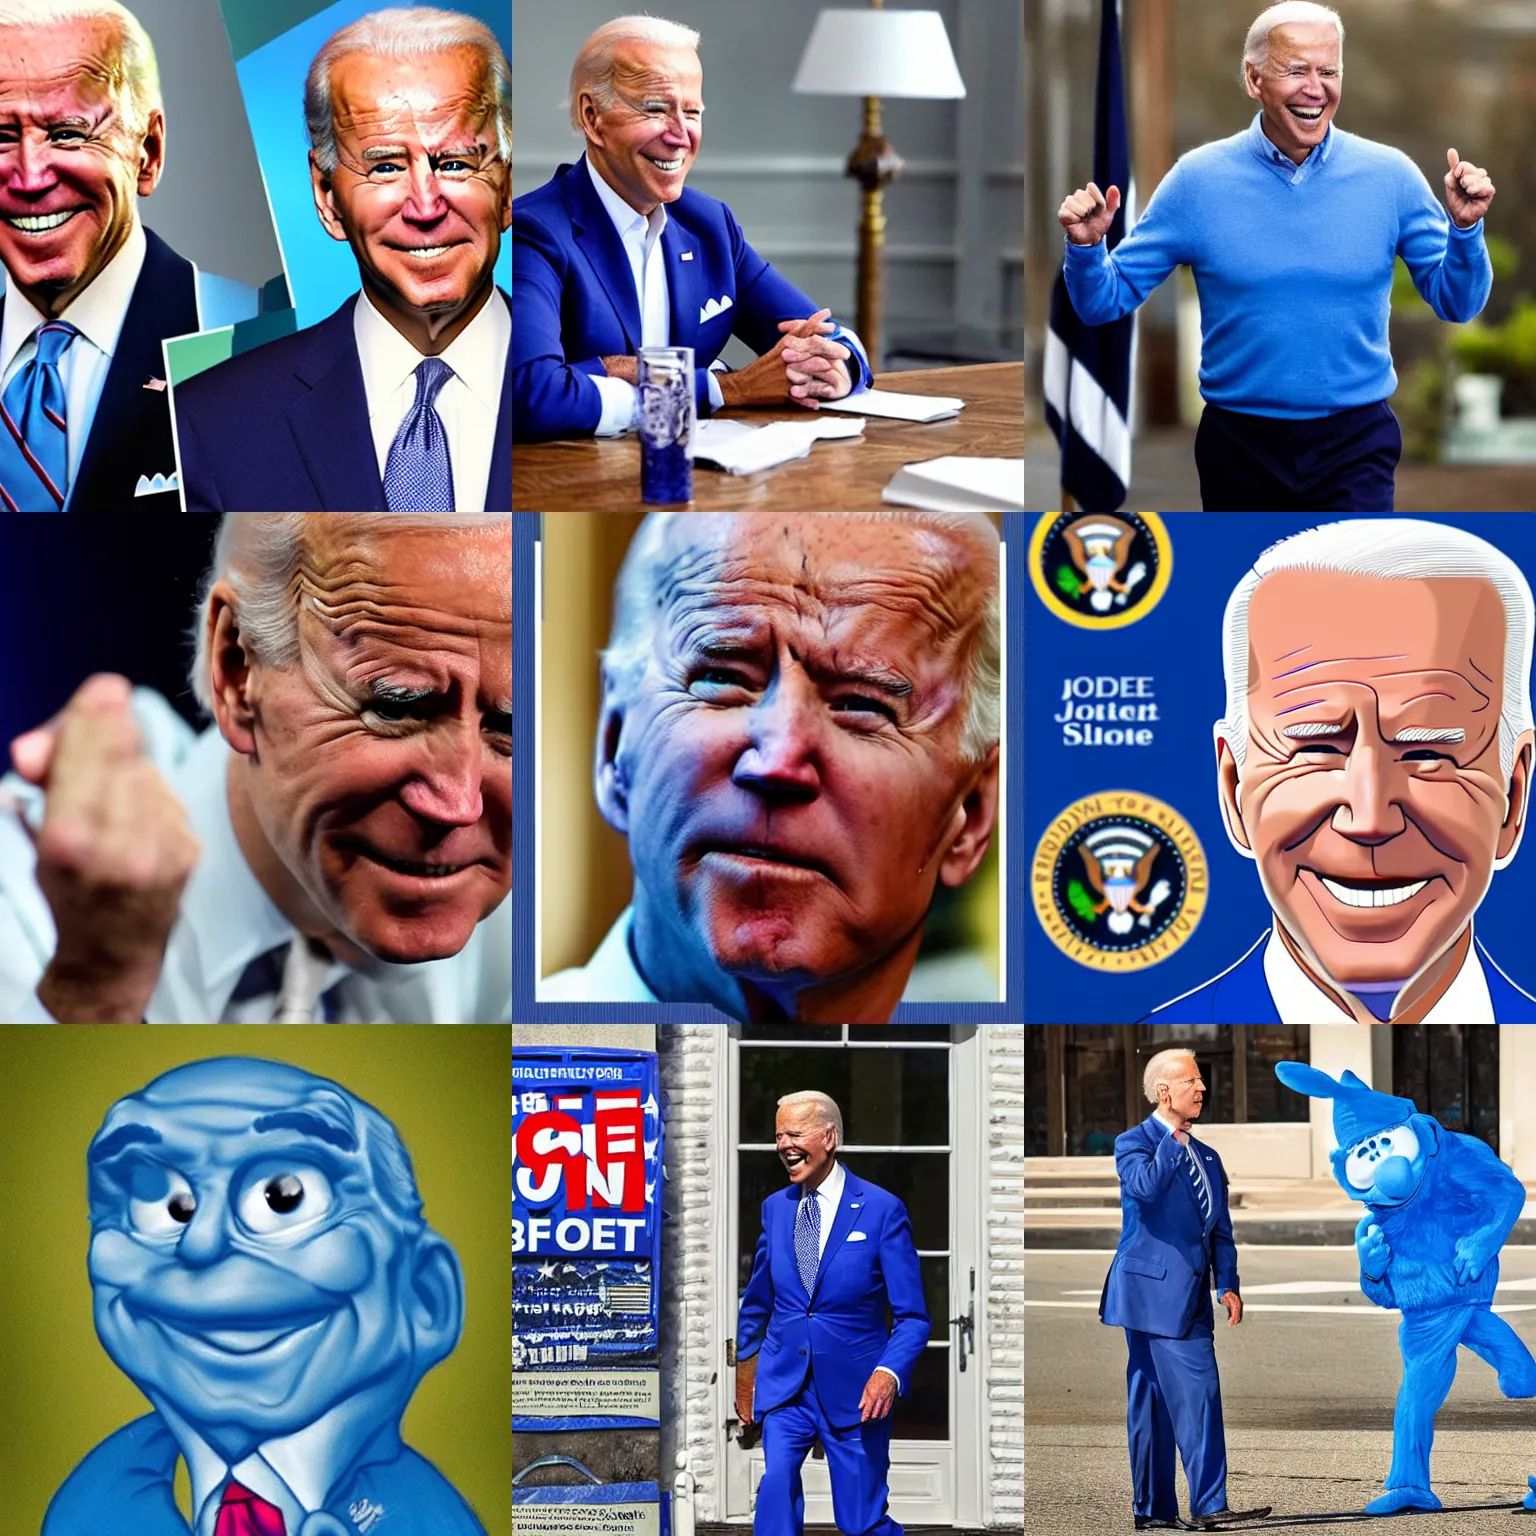 Prompt: Joe Biden as a blue smurf